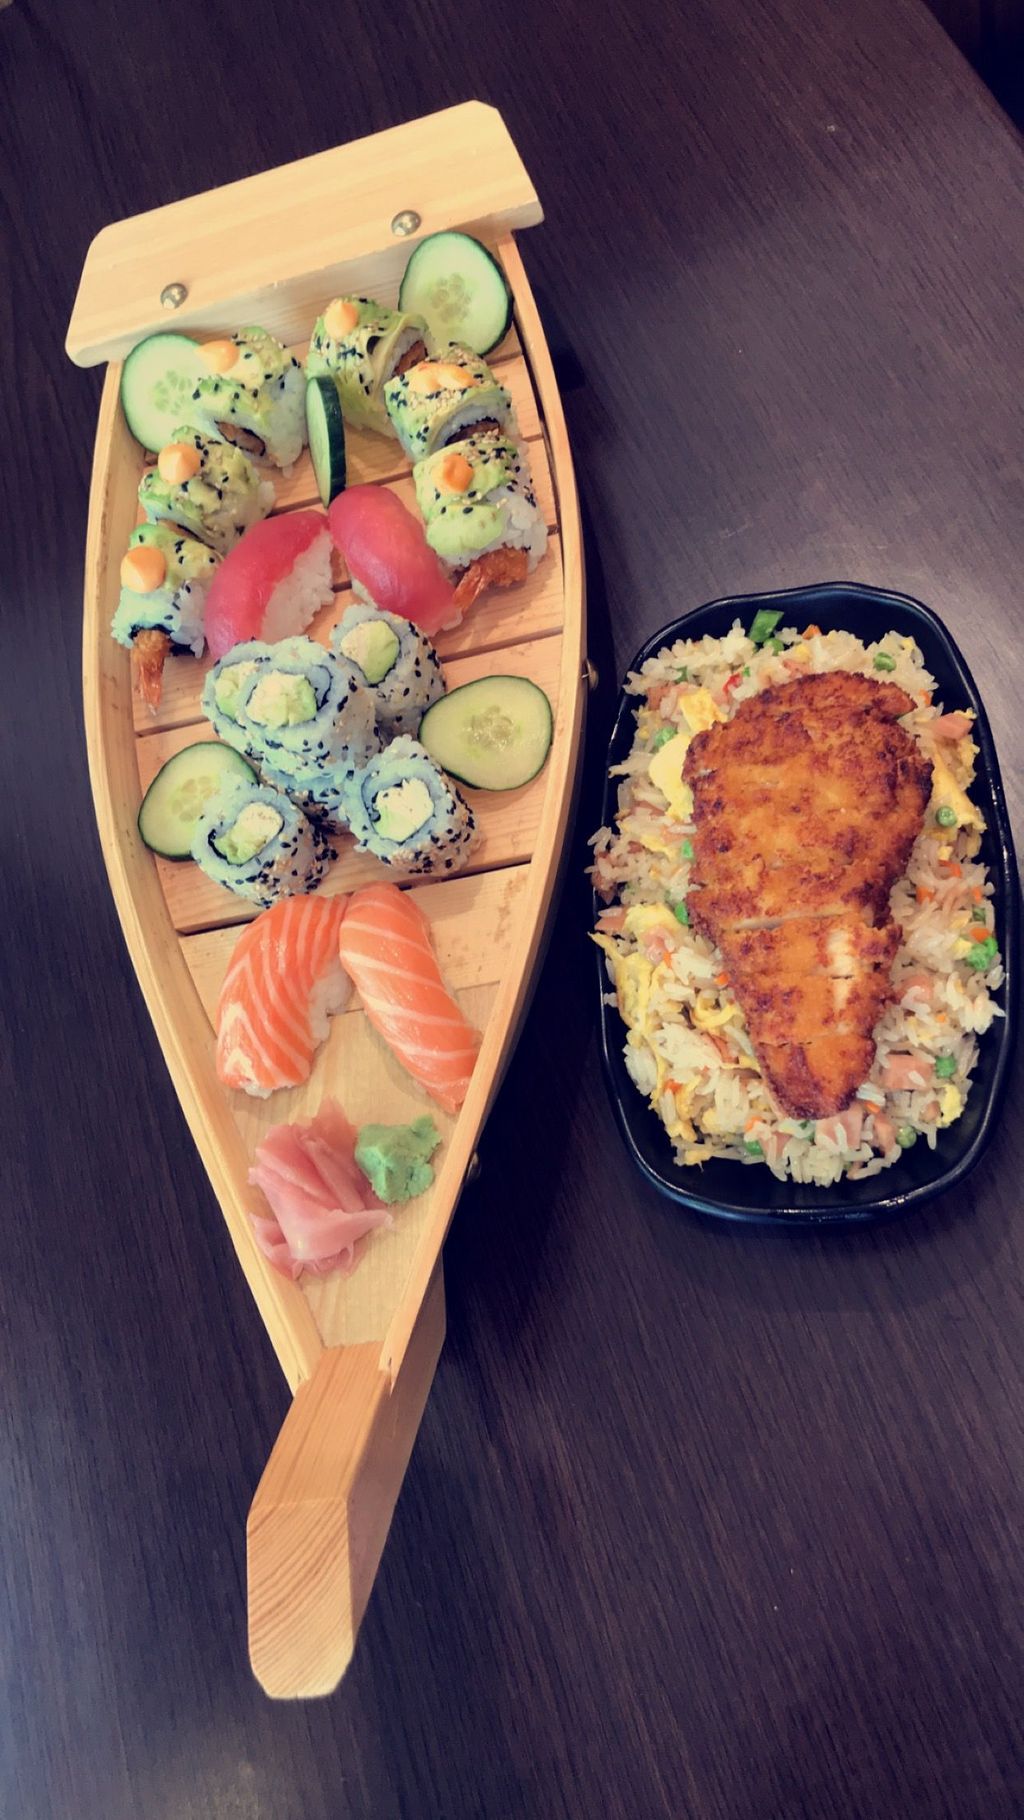 SUSHI STORY LISSES Japonais Lisses - Dish Cuisine Food Meal Lunch